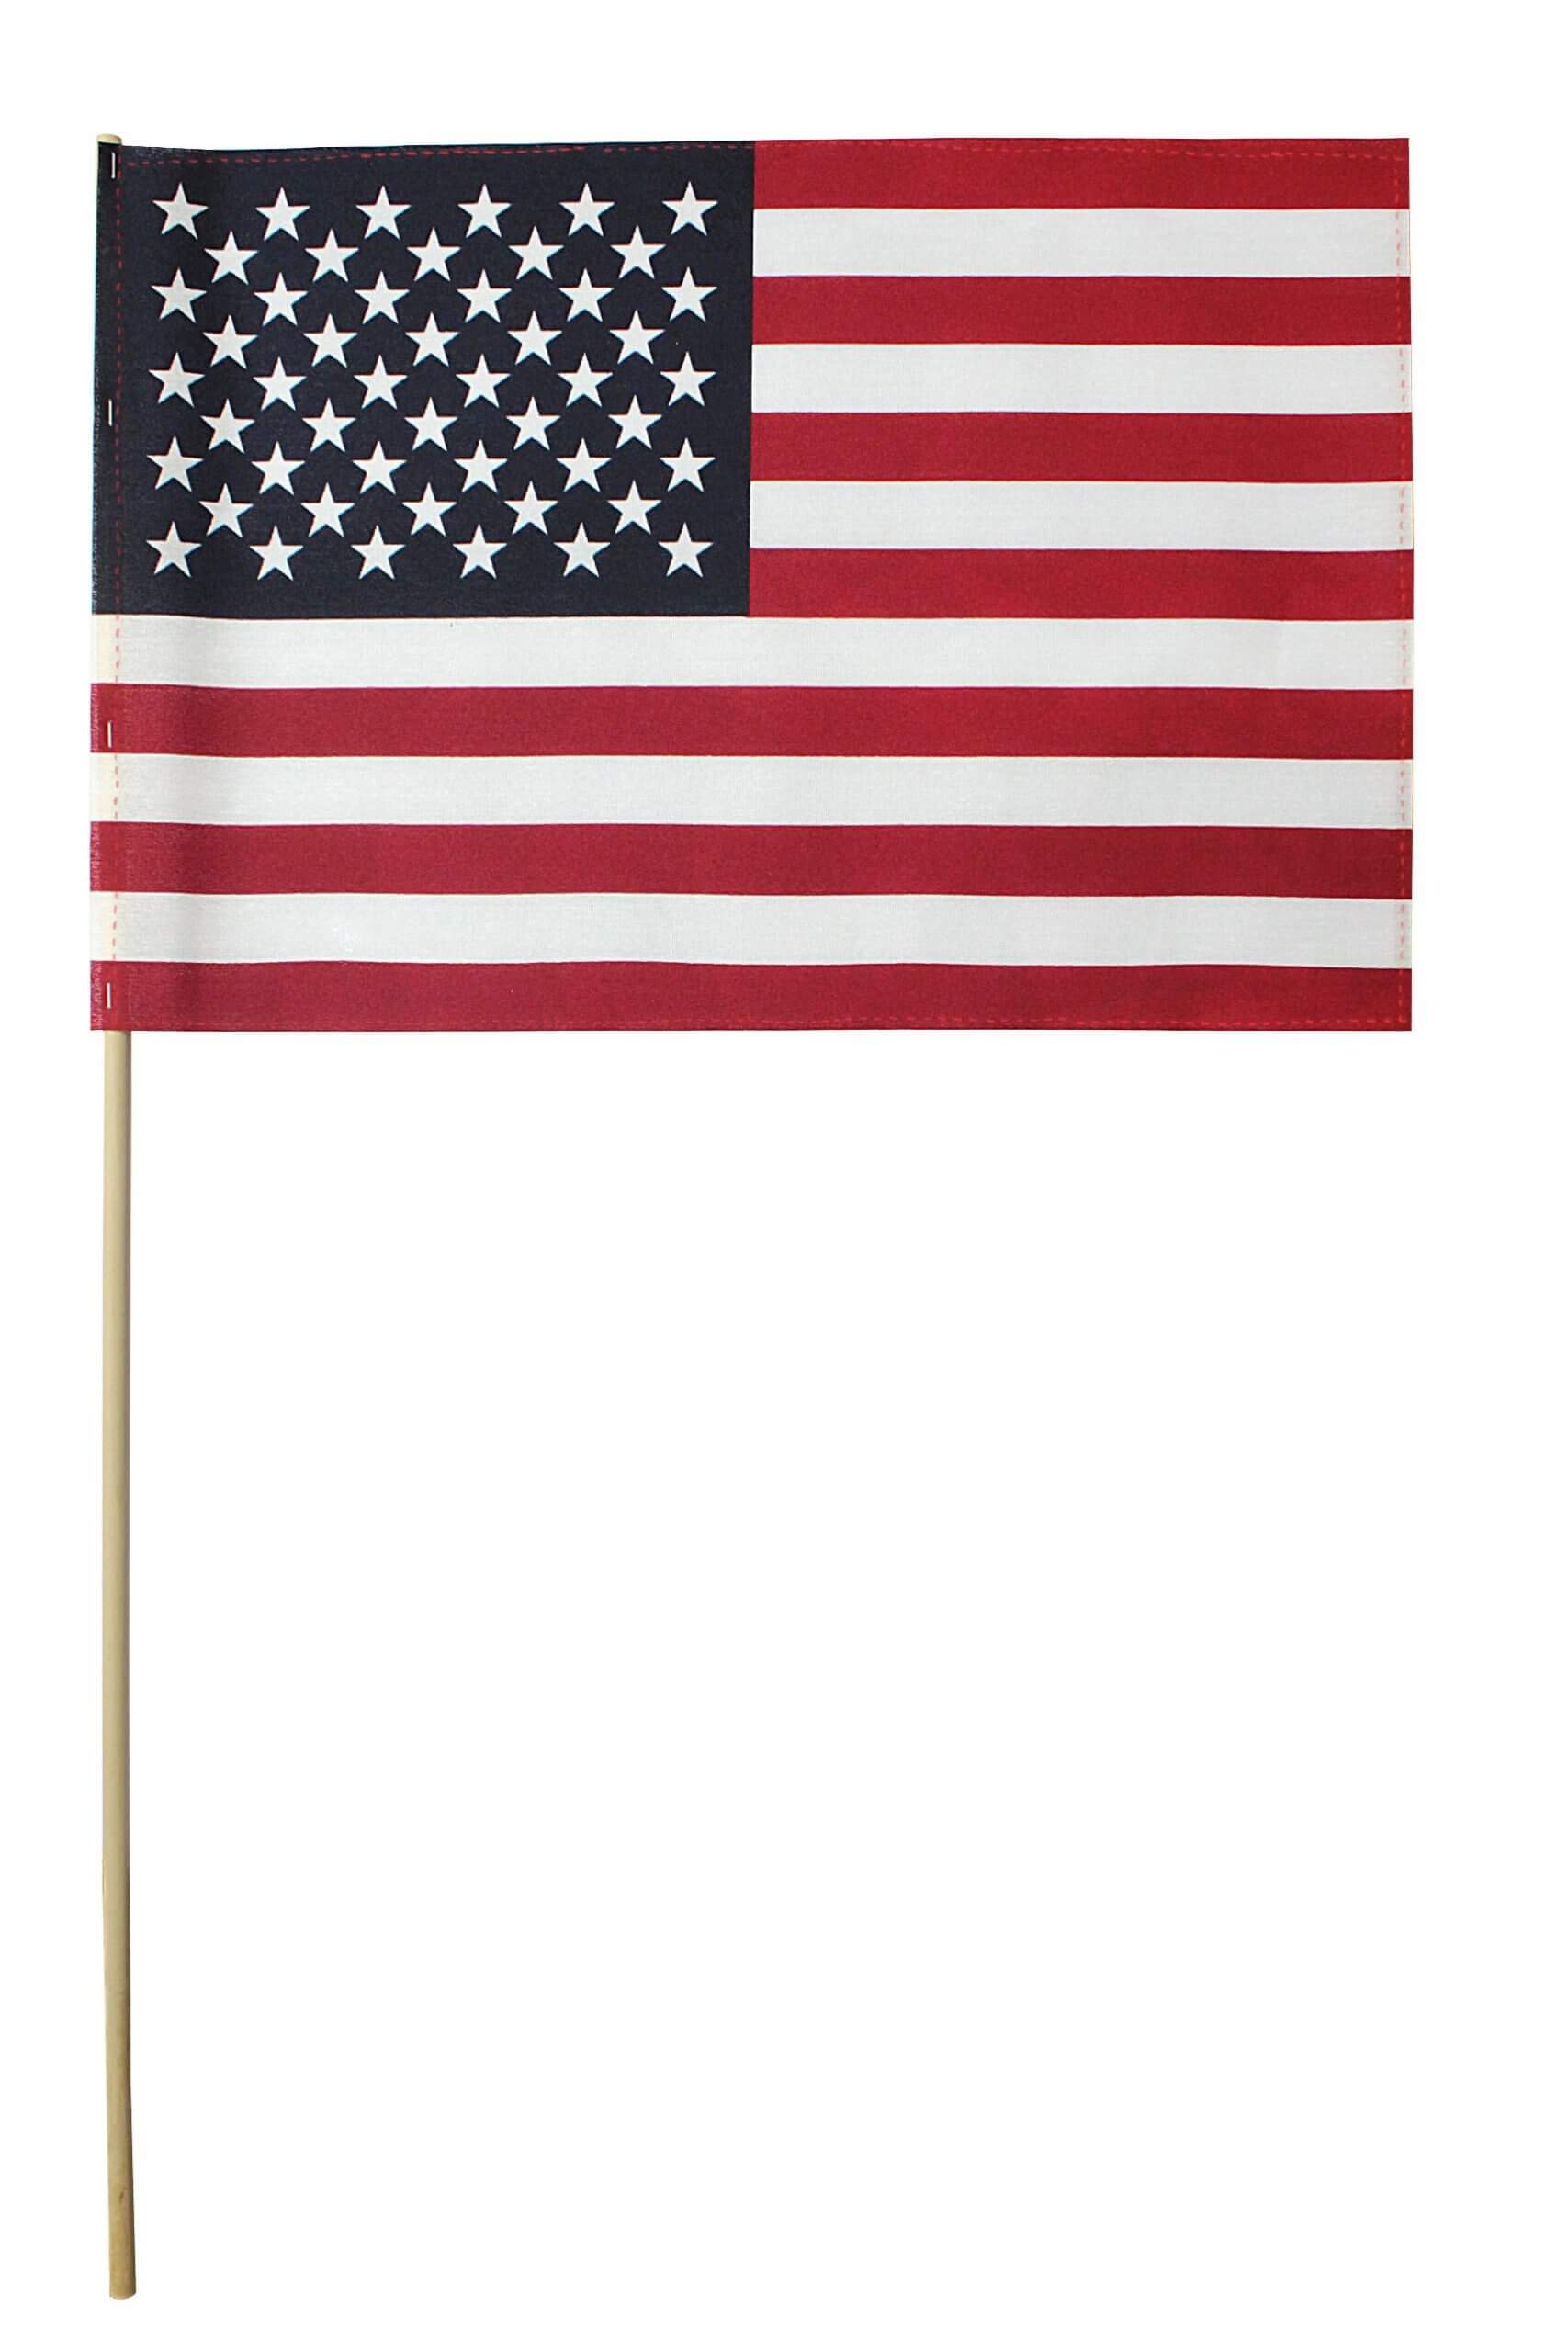 BULK U.S. Cemetery Flag 12" x 18" - HEMMED American Veteran Stick Flag - 3/8" x 30" Wood Dowel - Spear Tip - Bundle of 144 Flags - MADE IN THE USA